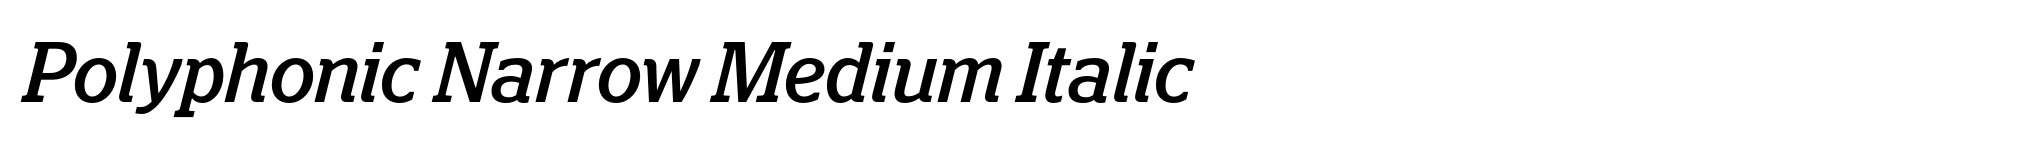 Polyphonic Narrow Medium Italic image